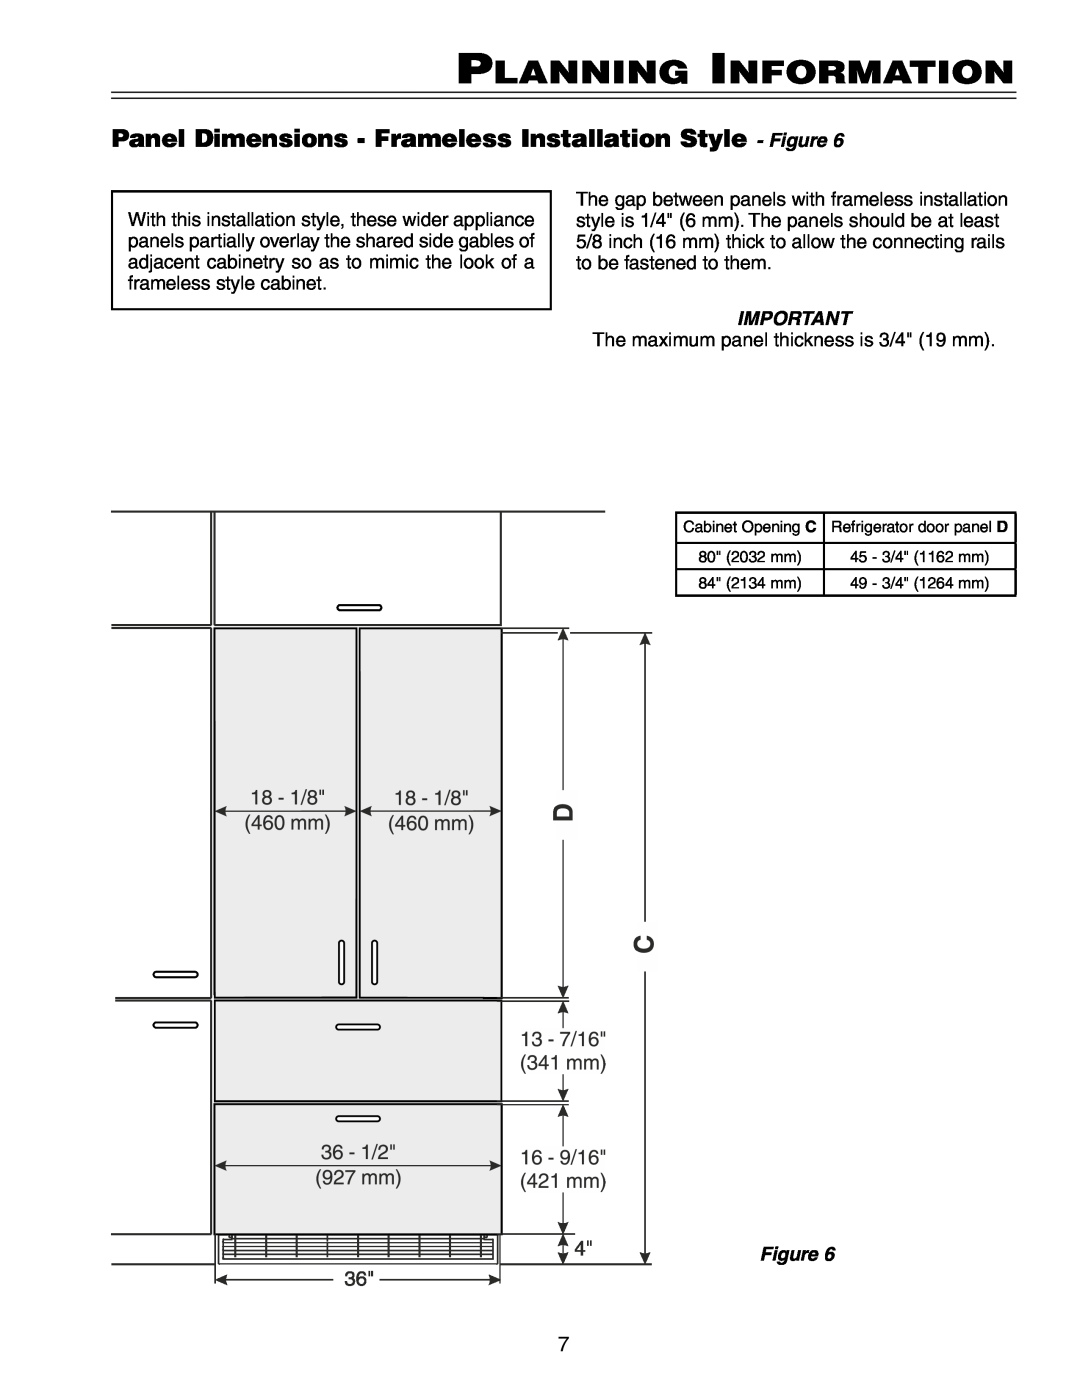 Liebherr HC 2062 Panel Dimensions - Frameless Installation Style - Figure, Planning Information, Cabinet Opening C 